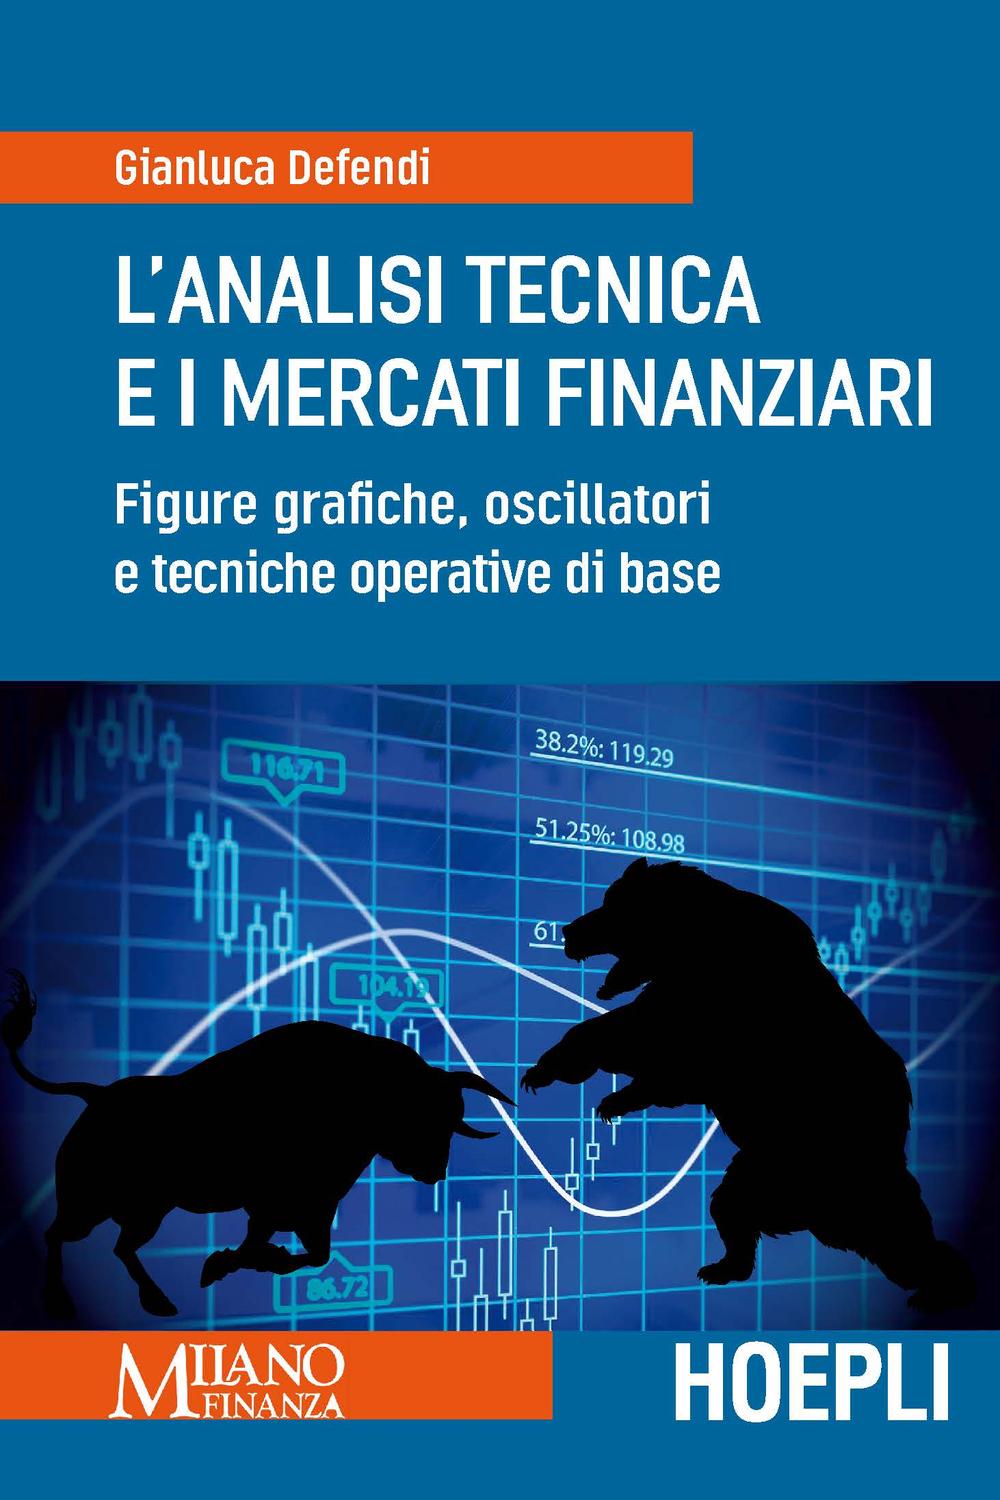 PDF] L'analisi tecnica e i mercati finanziari by Gianluca Defendi eBook